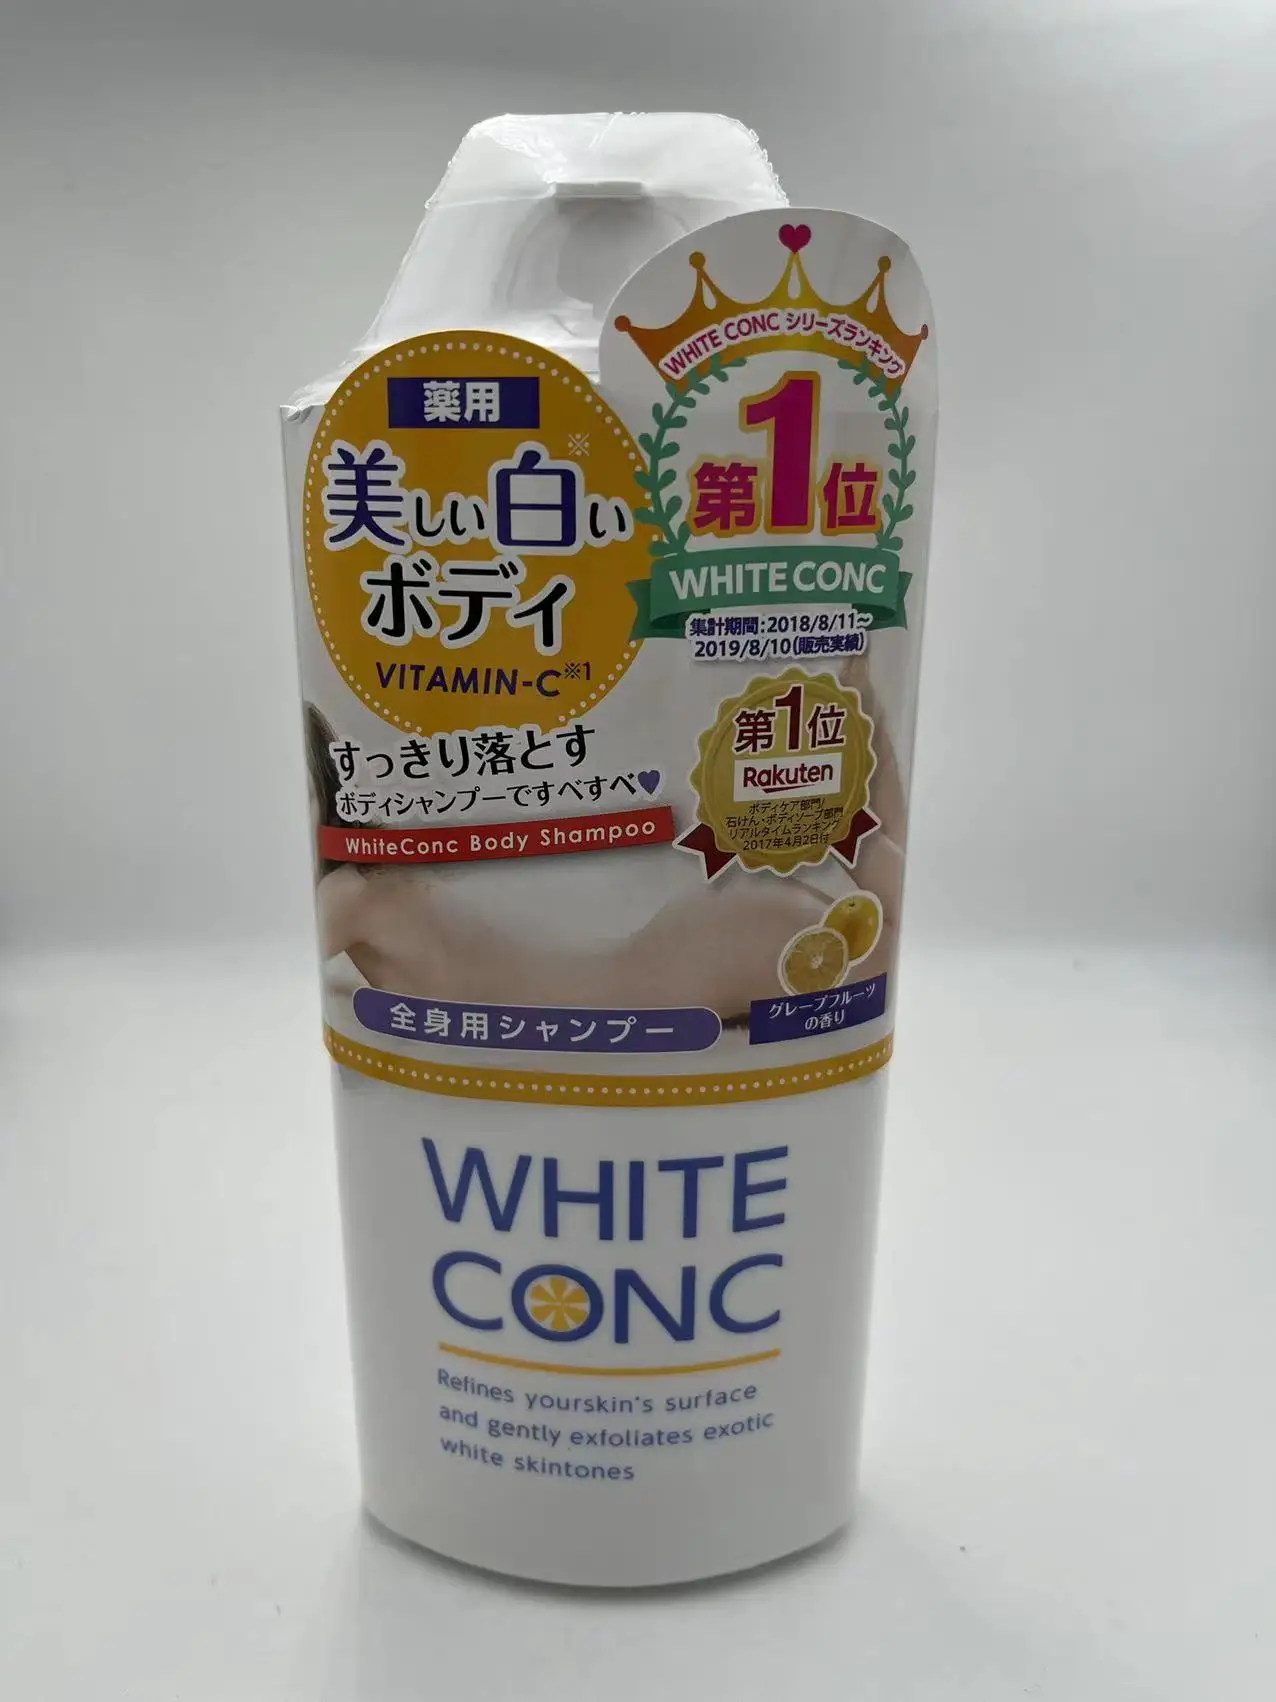 WHITE CONC Medicated Whitening Body Shampoo CII 360mL Vitamin C Japan